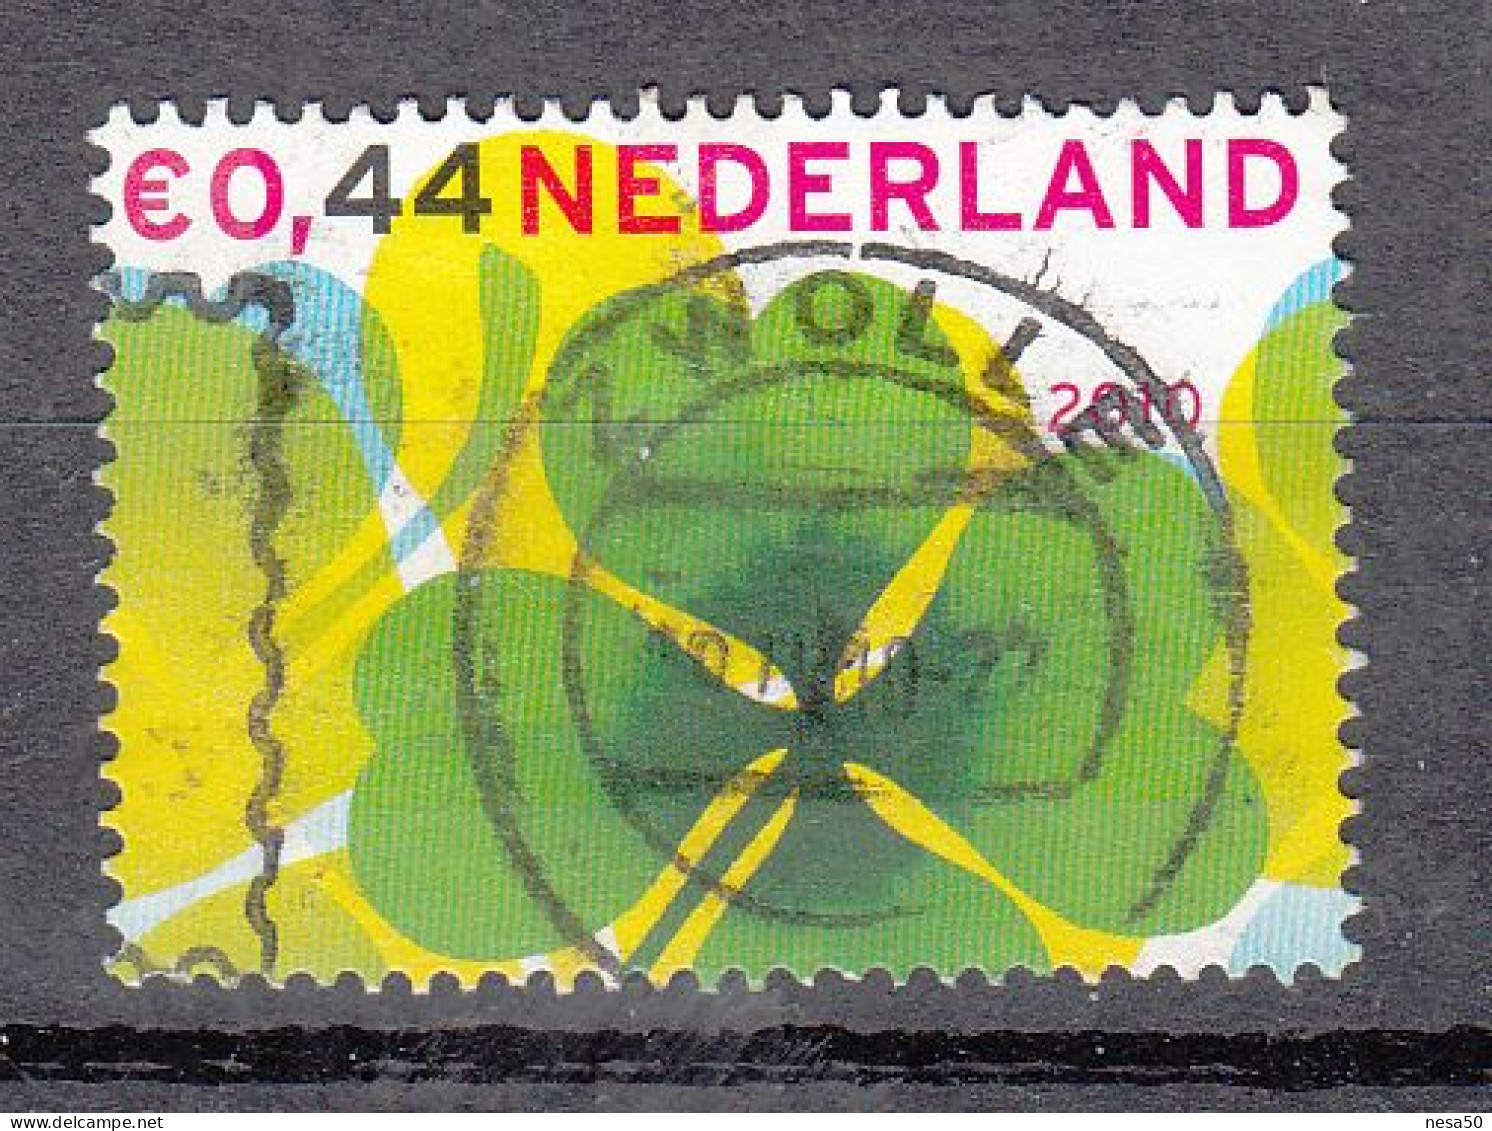 Nederland 2010 Nvph Nr 2713 A, Mi Nr 2742, Weken Van De Kaart - Usados